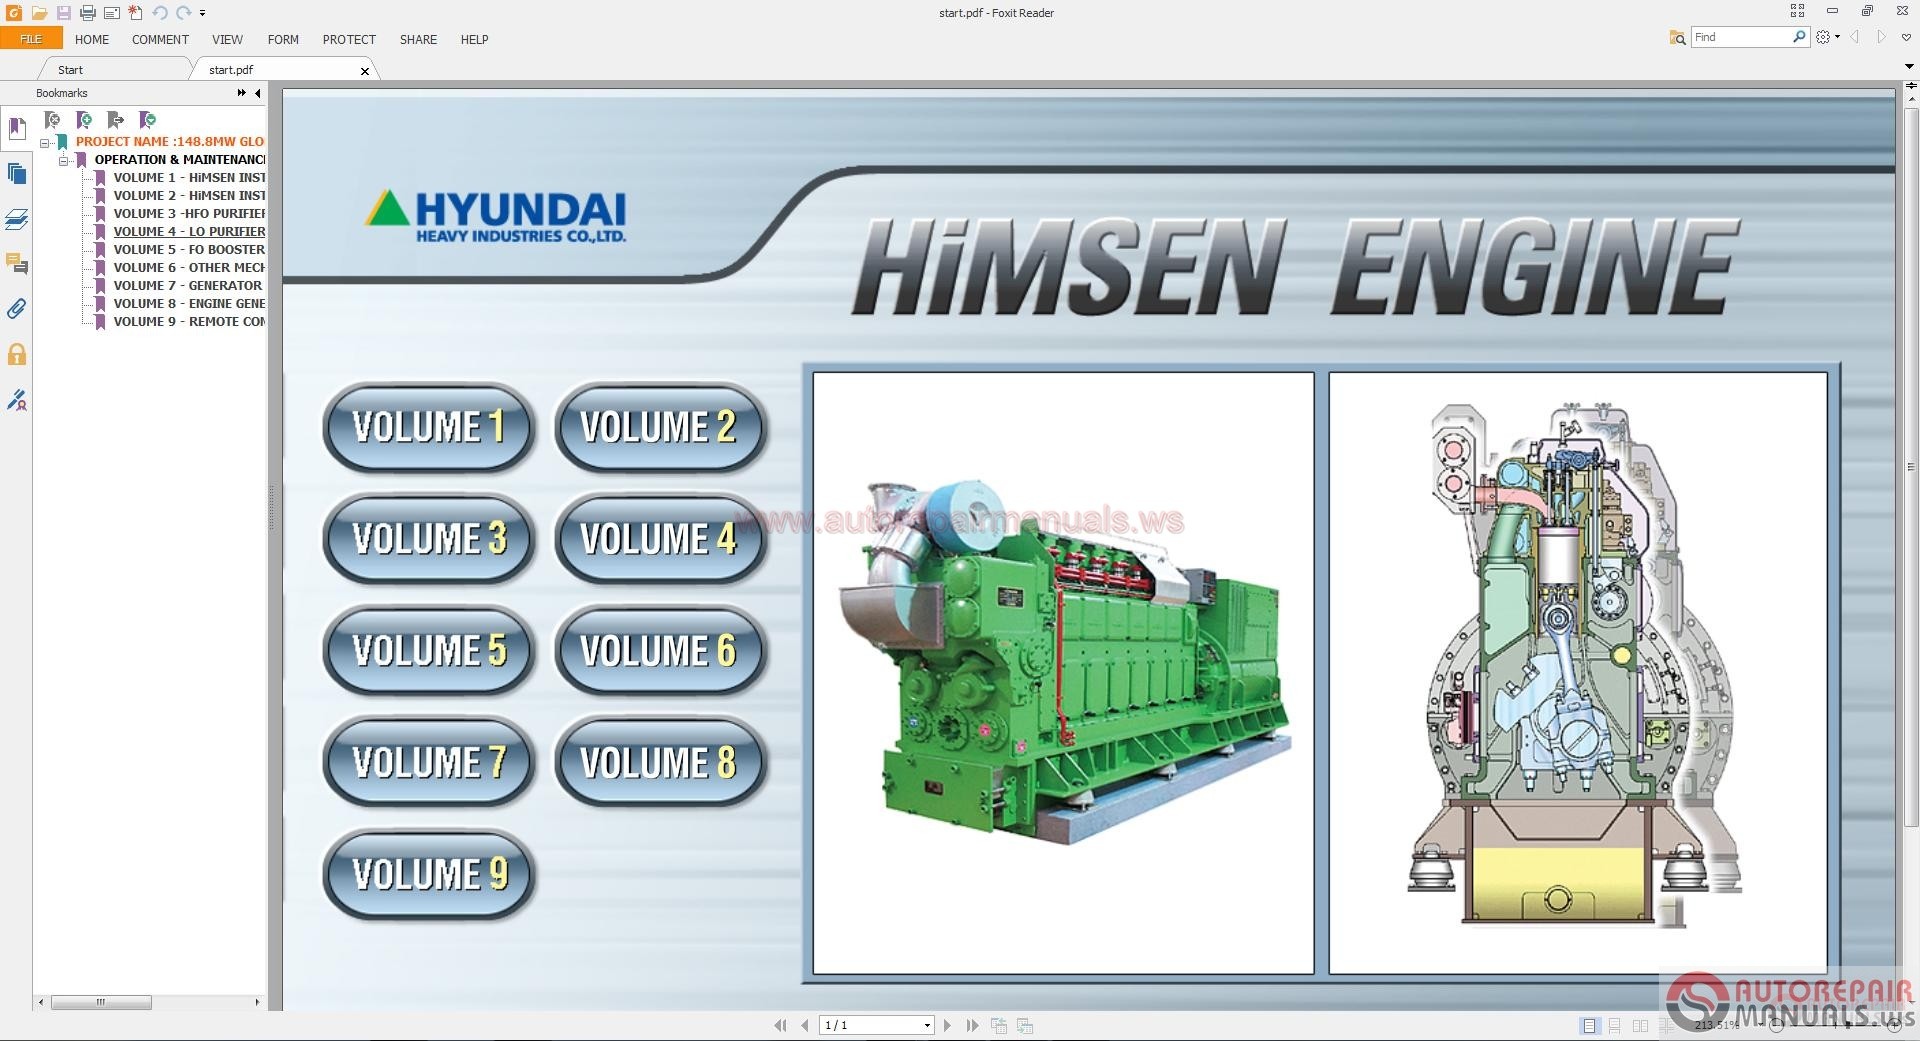 Auto Repair Manuals: Hyundai Himsen Engine Instruction Manual